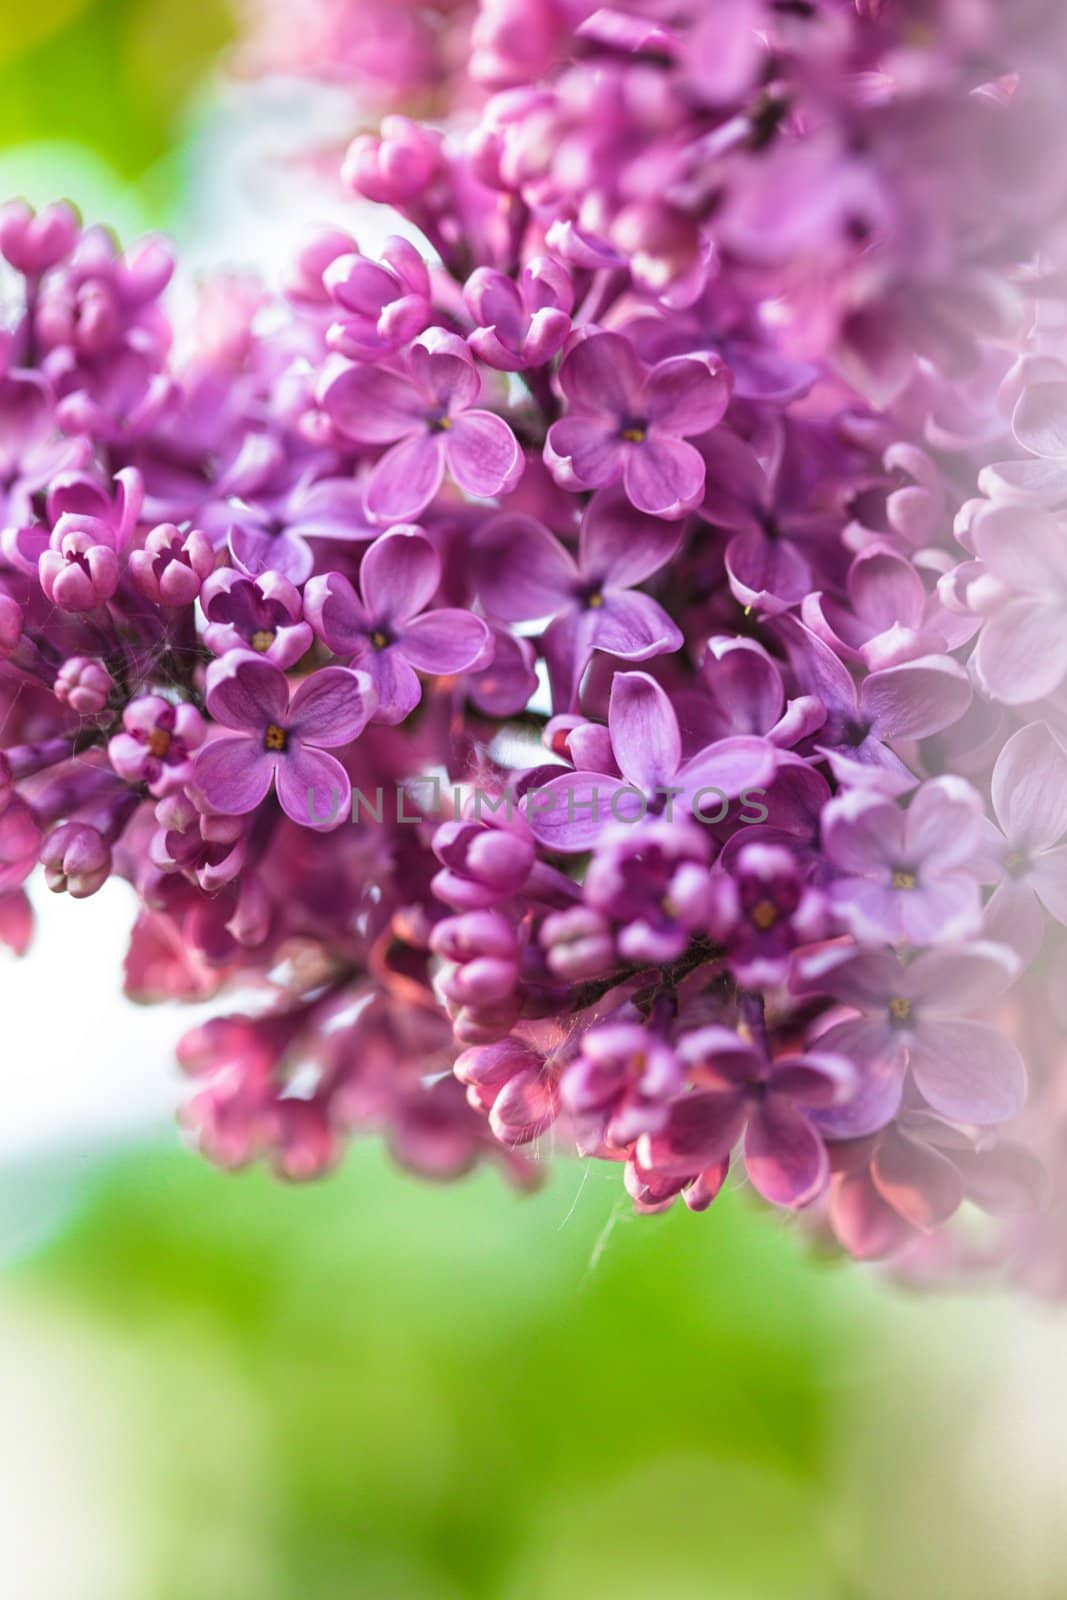 Lilac flowers by oksix